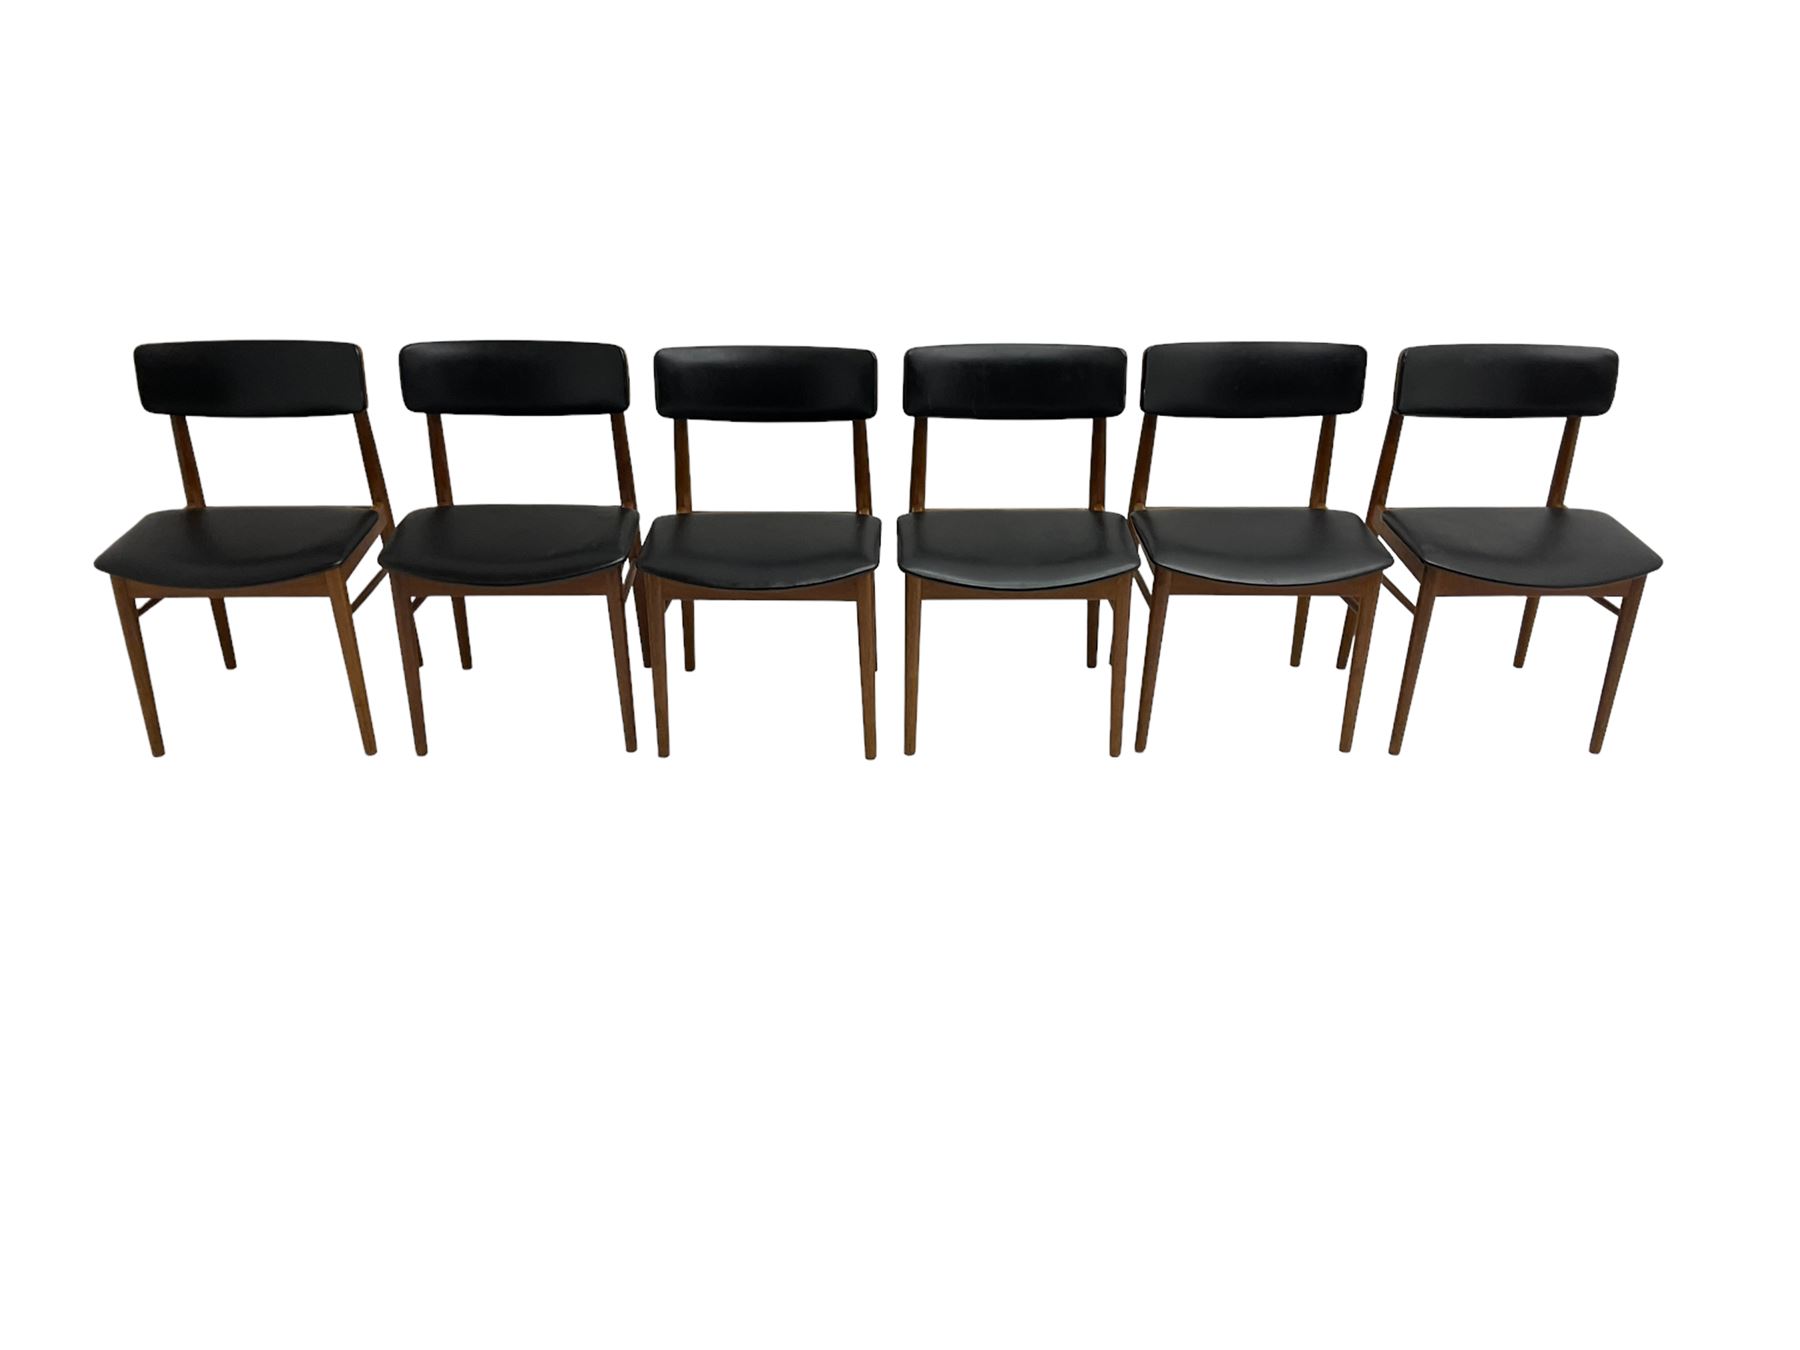 S Chrobat for Sax Mobler - set six mid-20th century Danish teak dining chairs - Image 6 of 6